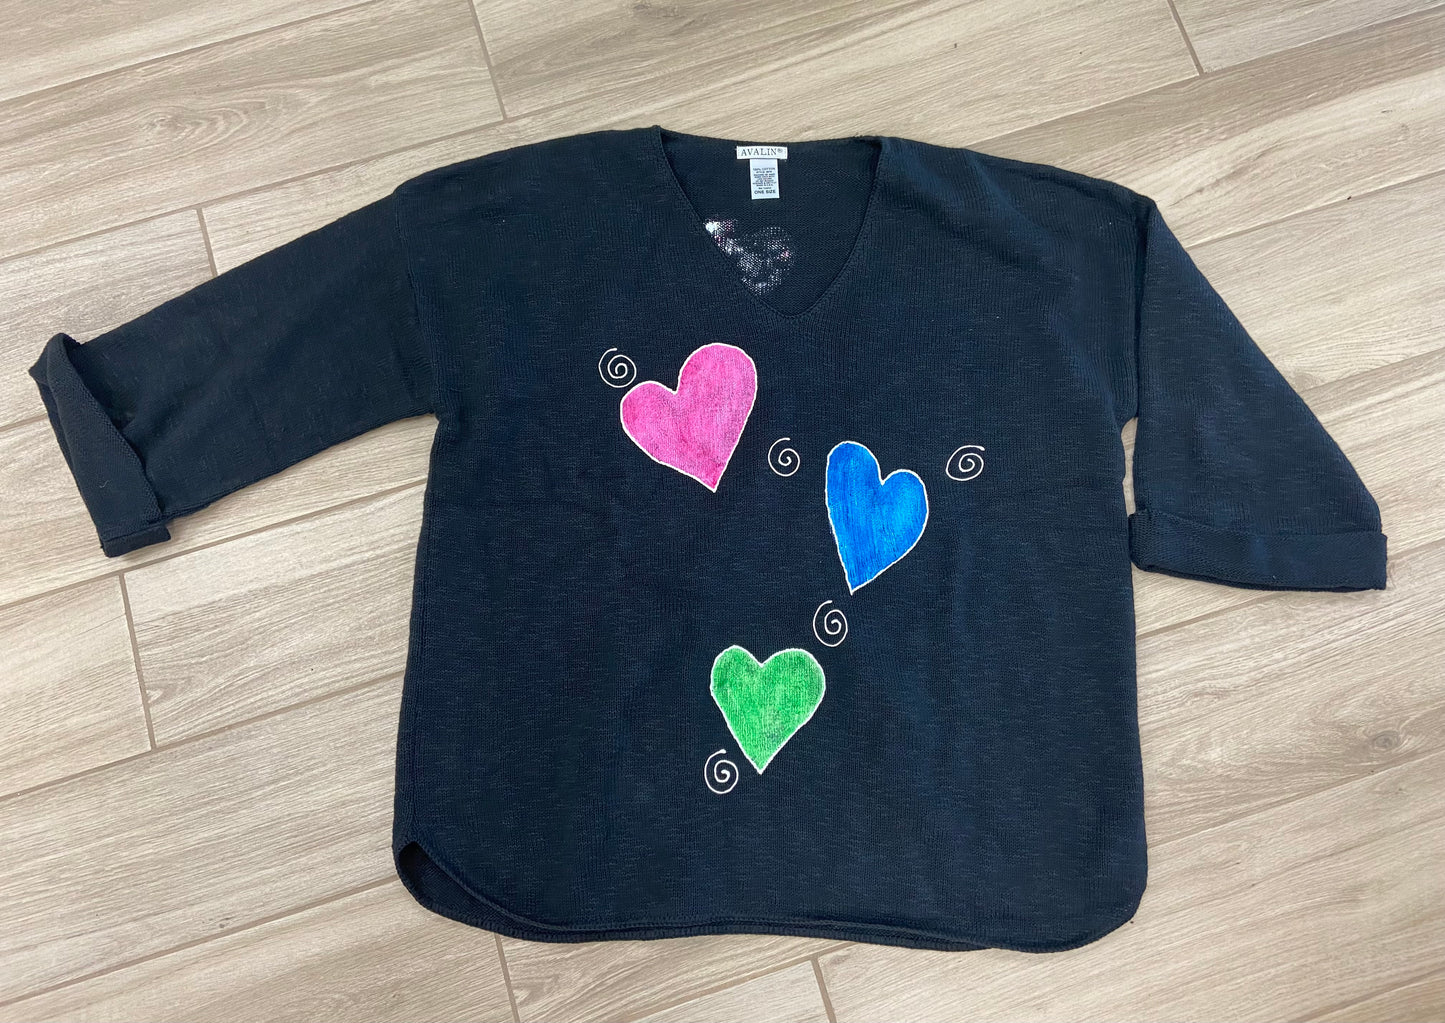 MoMo Sweater - Swirl Hearts